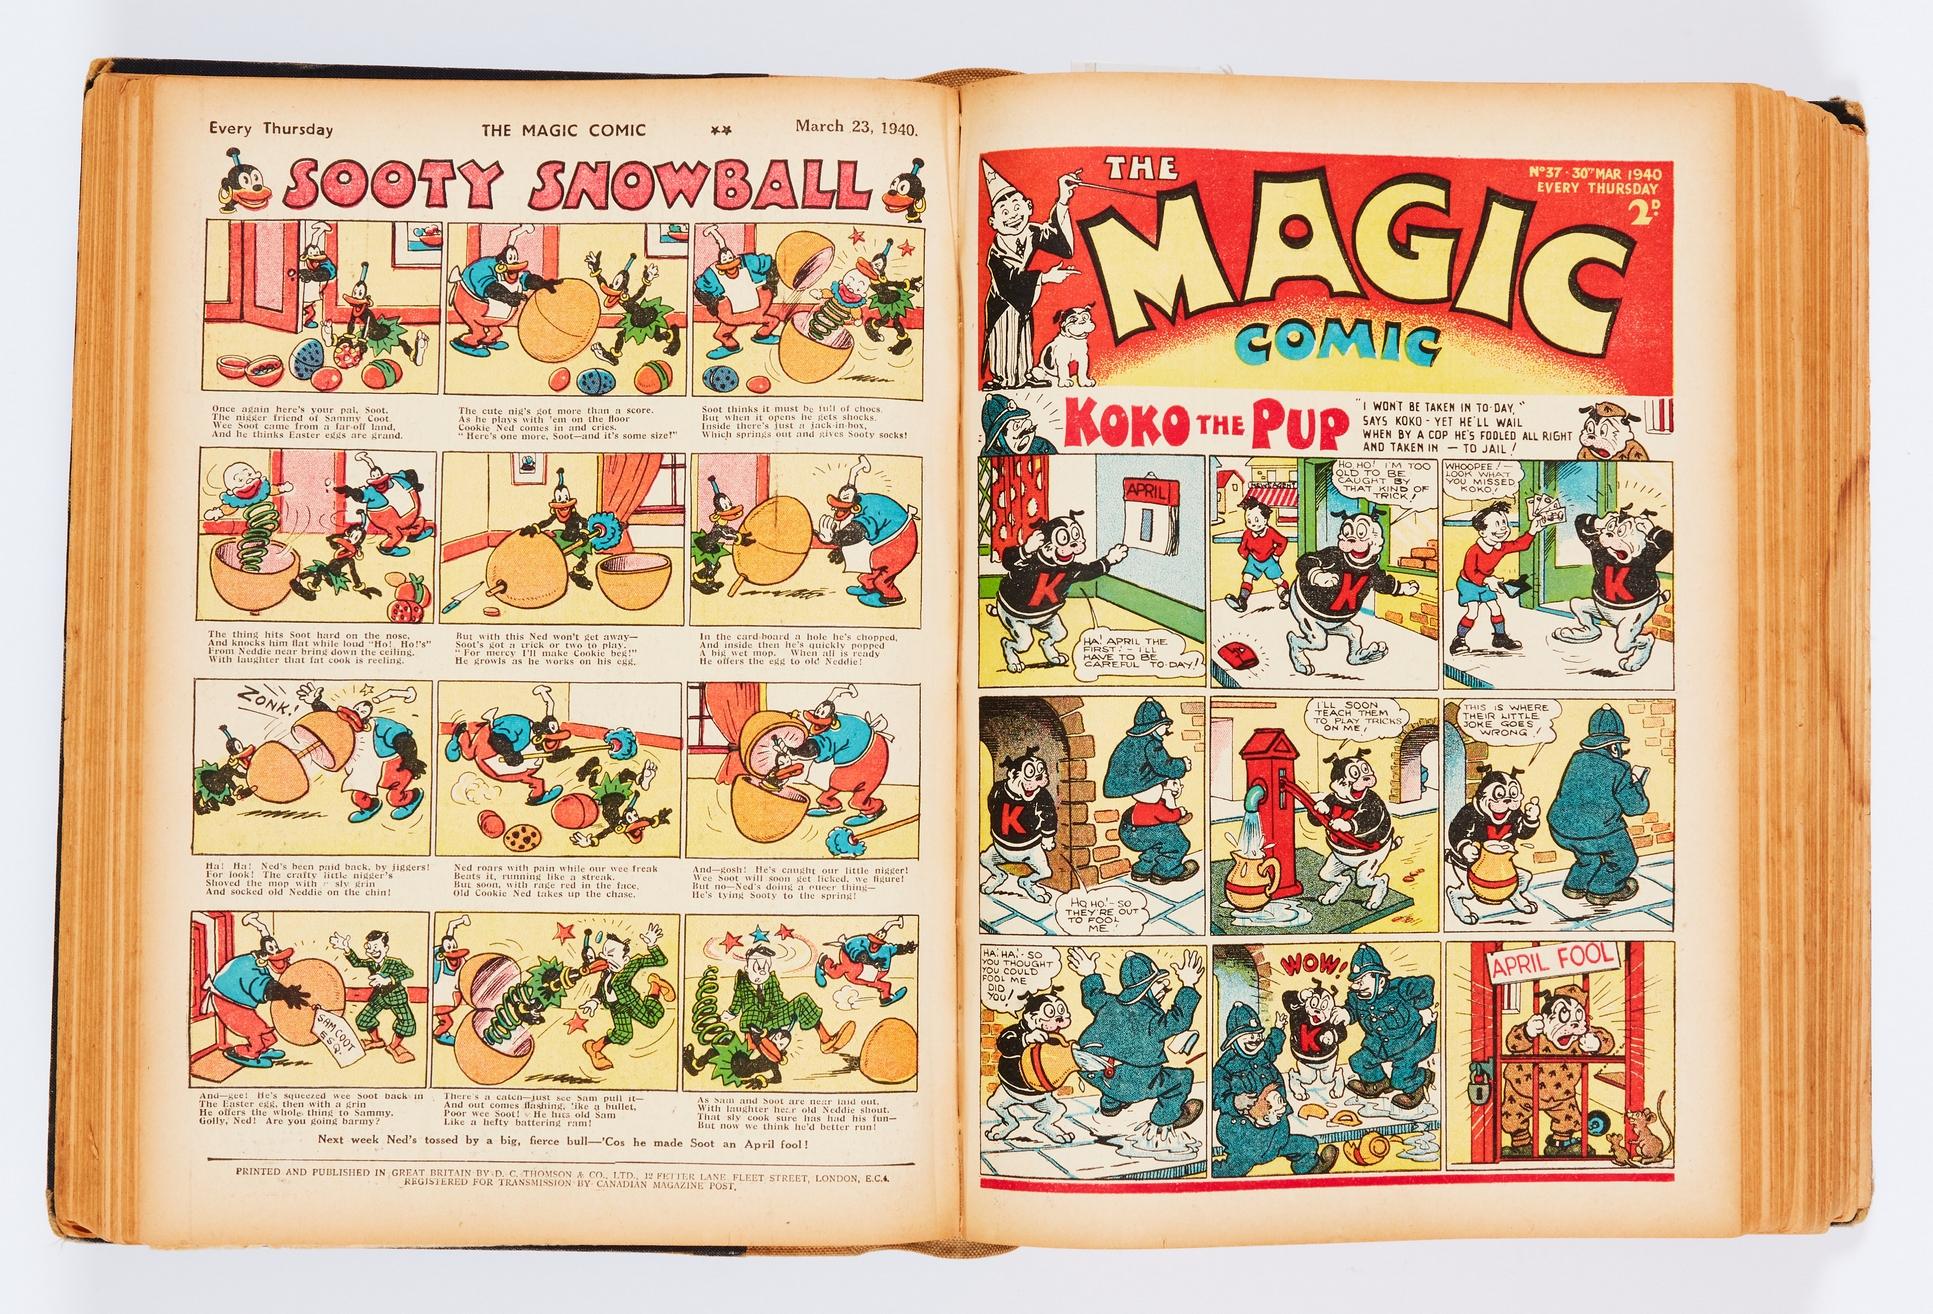 Magic Comic (1940-41) 25-80 (final issue). In bound volume. Propaganda war issues. E. H. Banger's